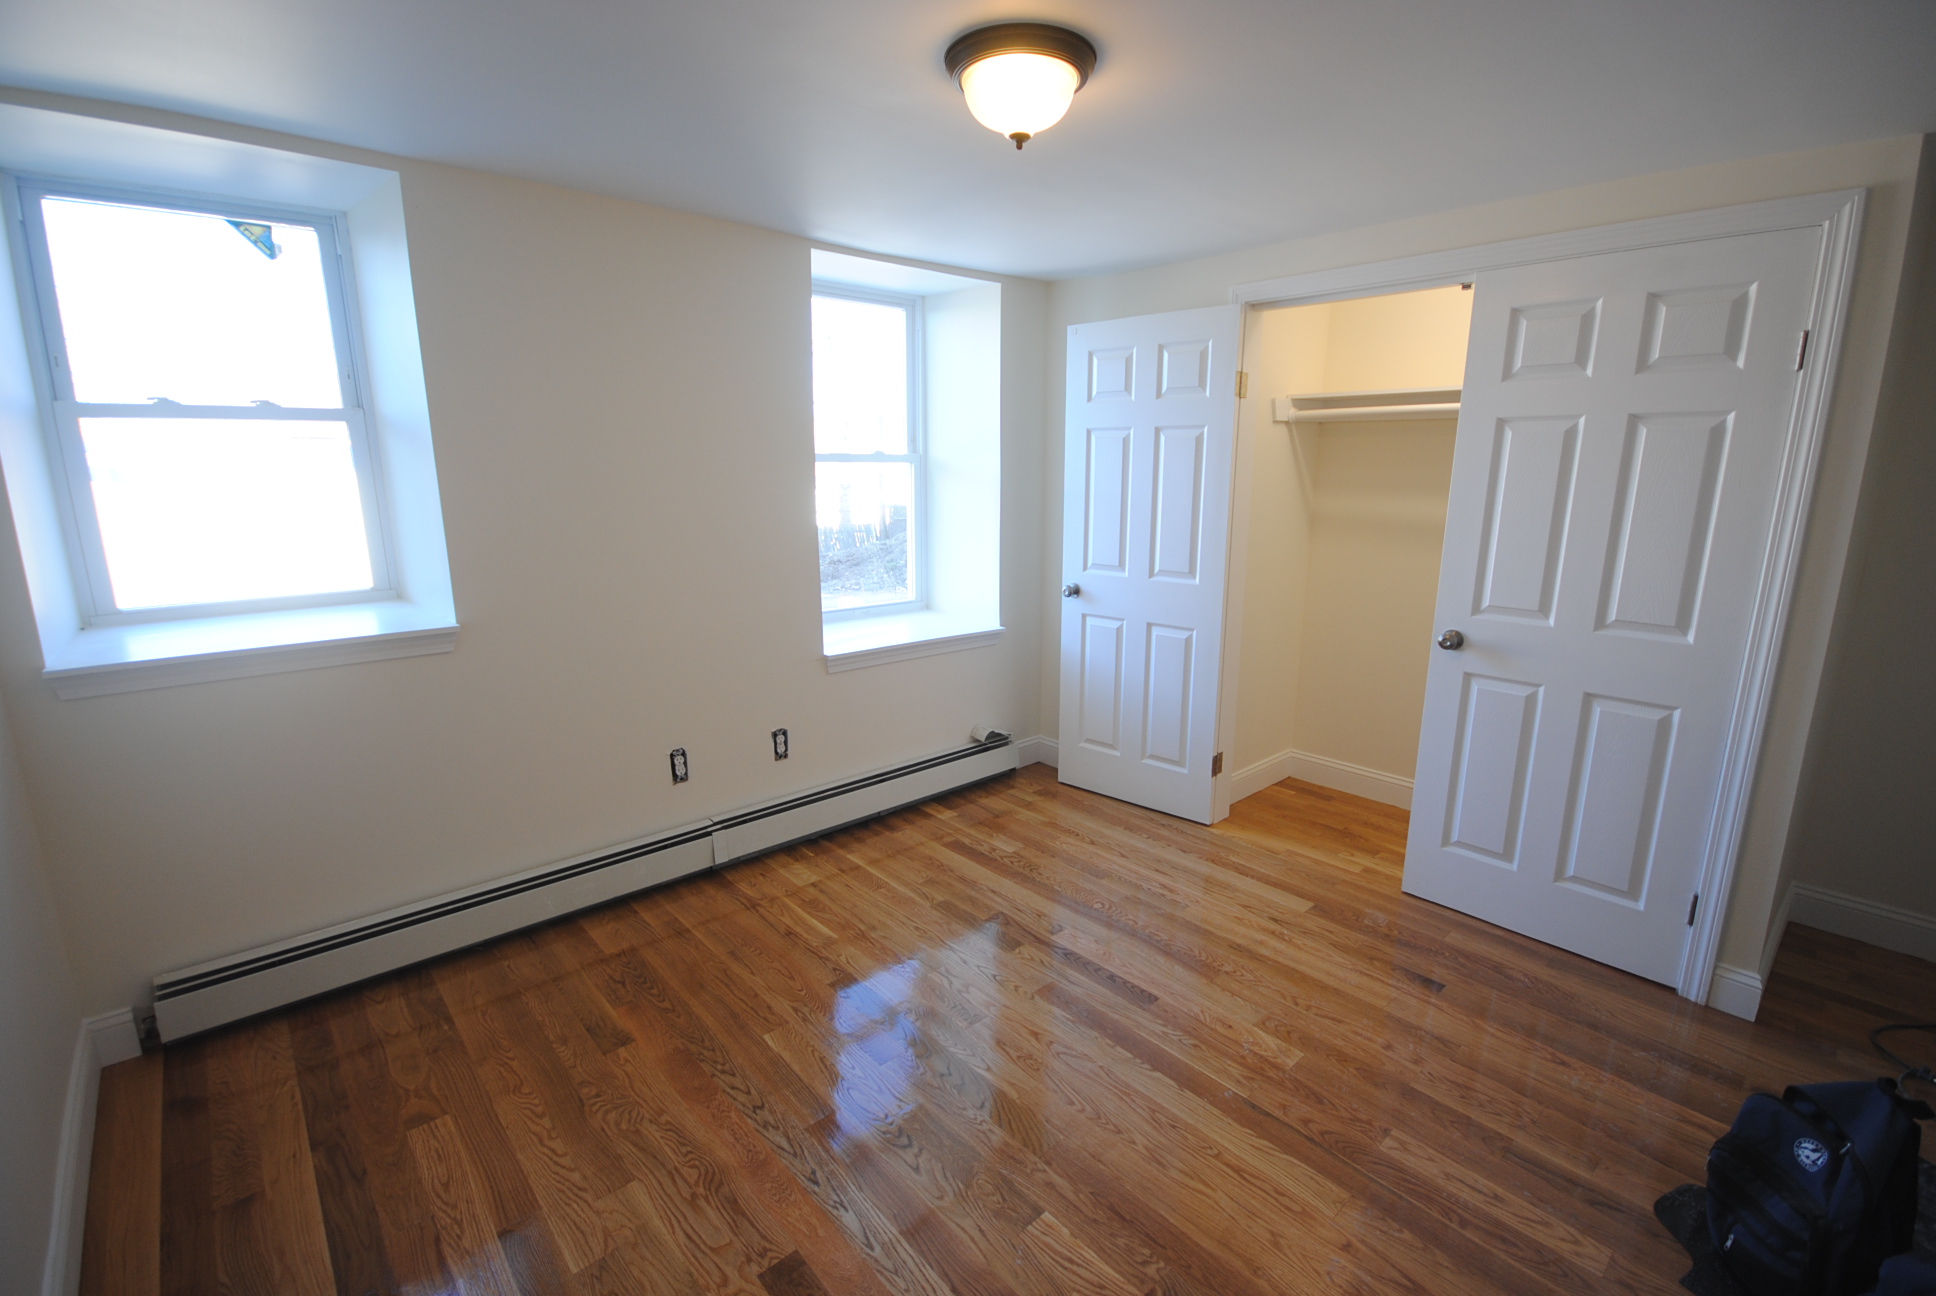 Photos of apartment on Wordsworth,Boston MA 02128